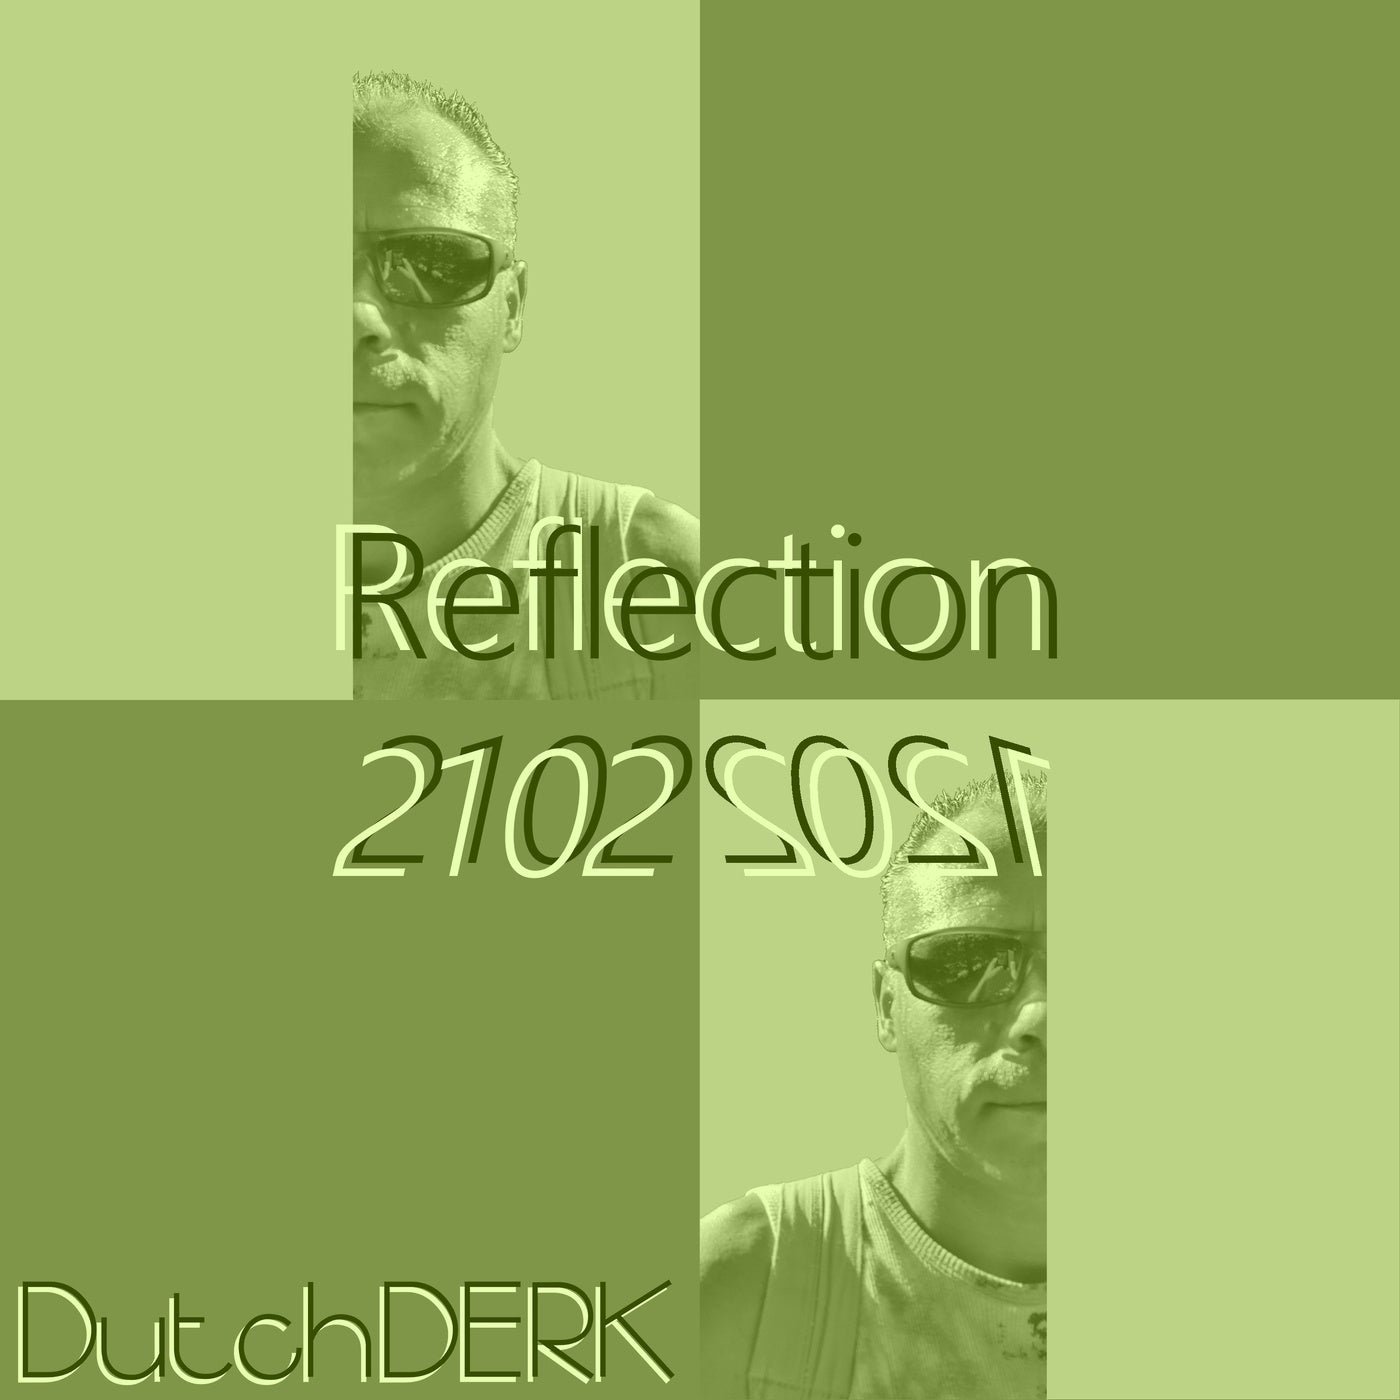 Reflection 2102